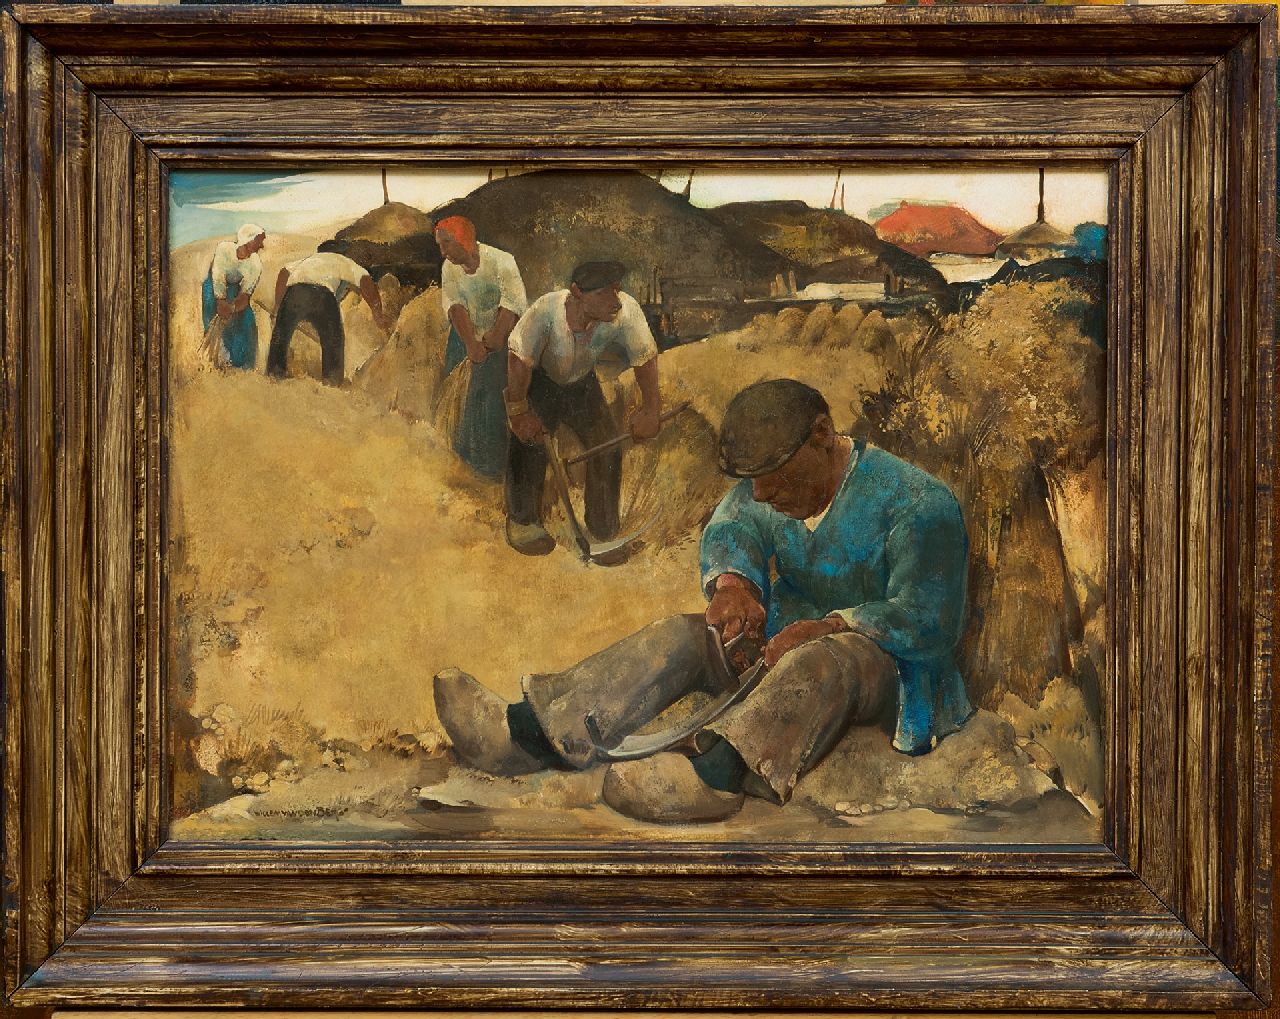 Berg W.H. van den | 'Willem' Hendrik van den Berg, Harvest, oil on board laid down on panel 36.5 x 51.0 cm, signed l.l. and on the stretcher